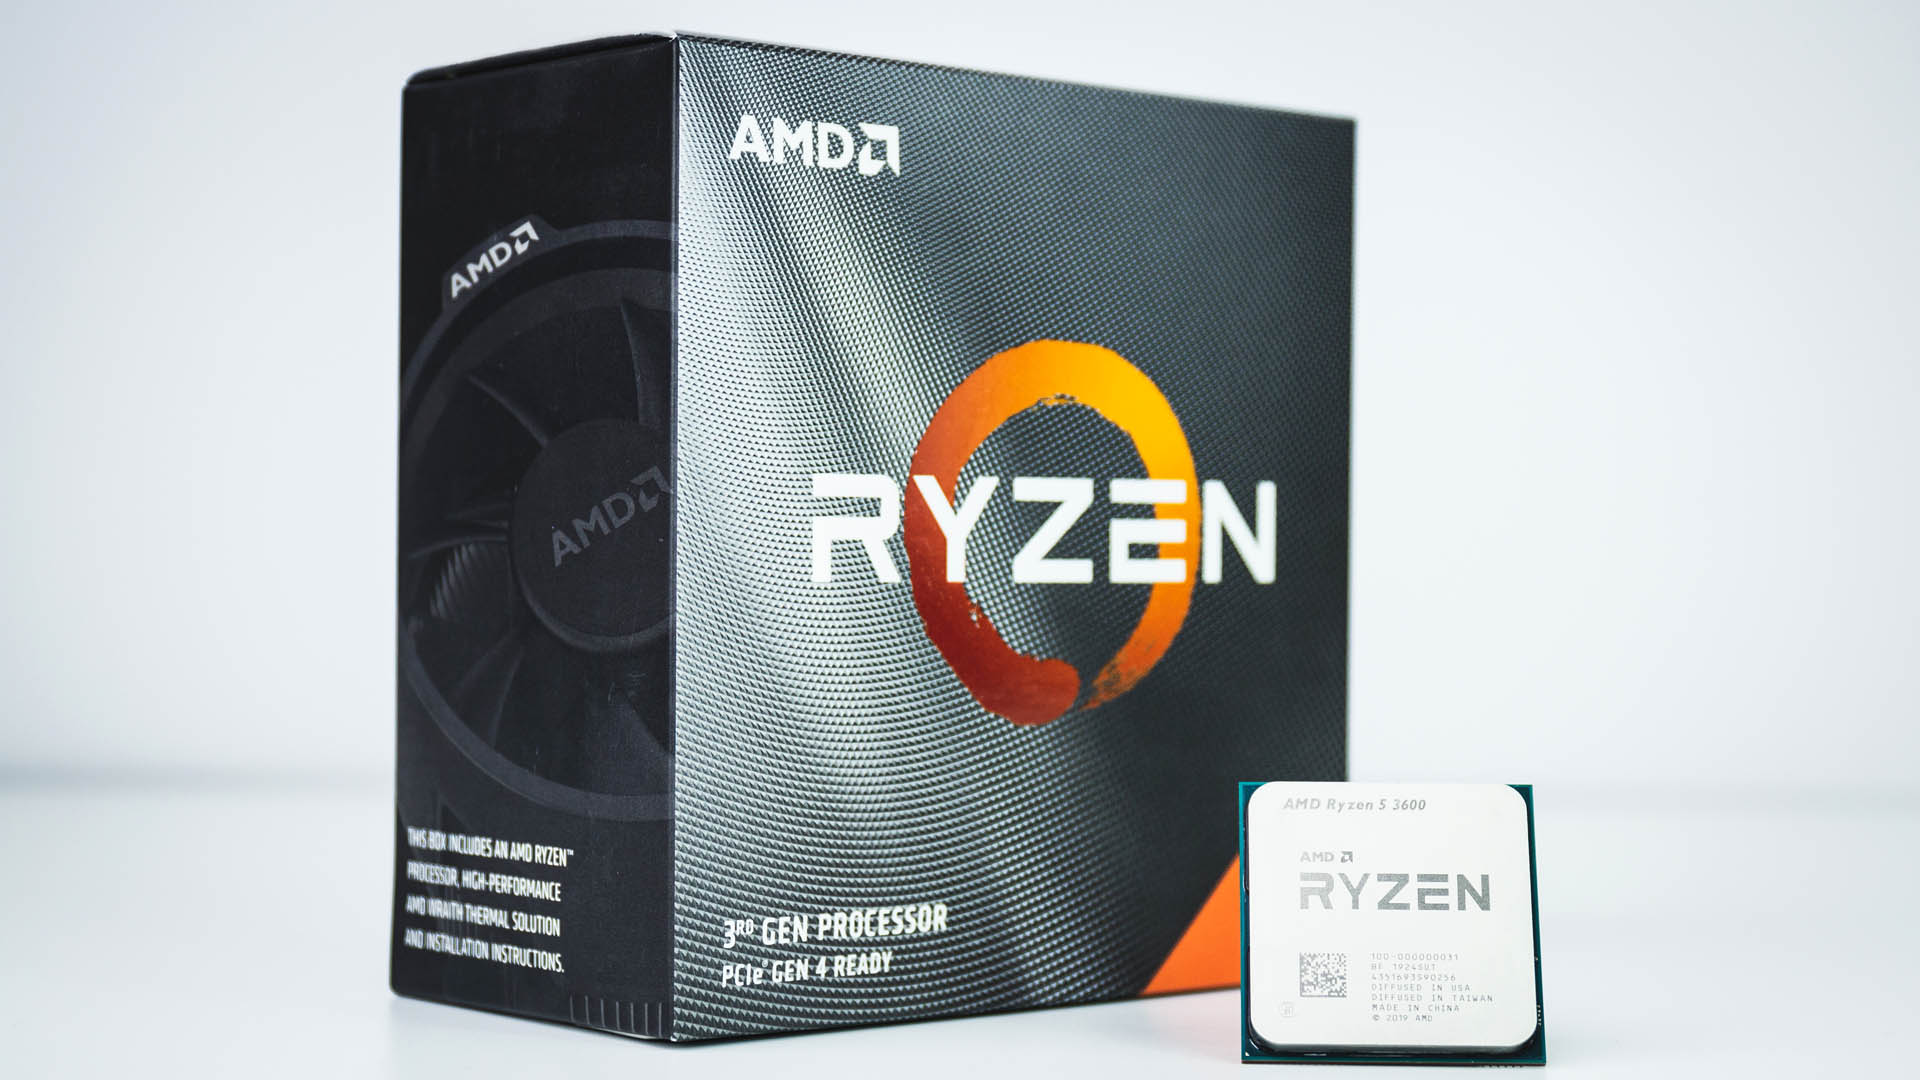 AMD Ryzen 5 3600 BOX-